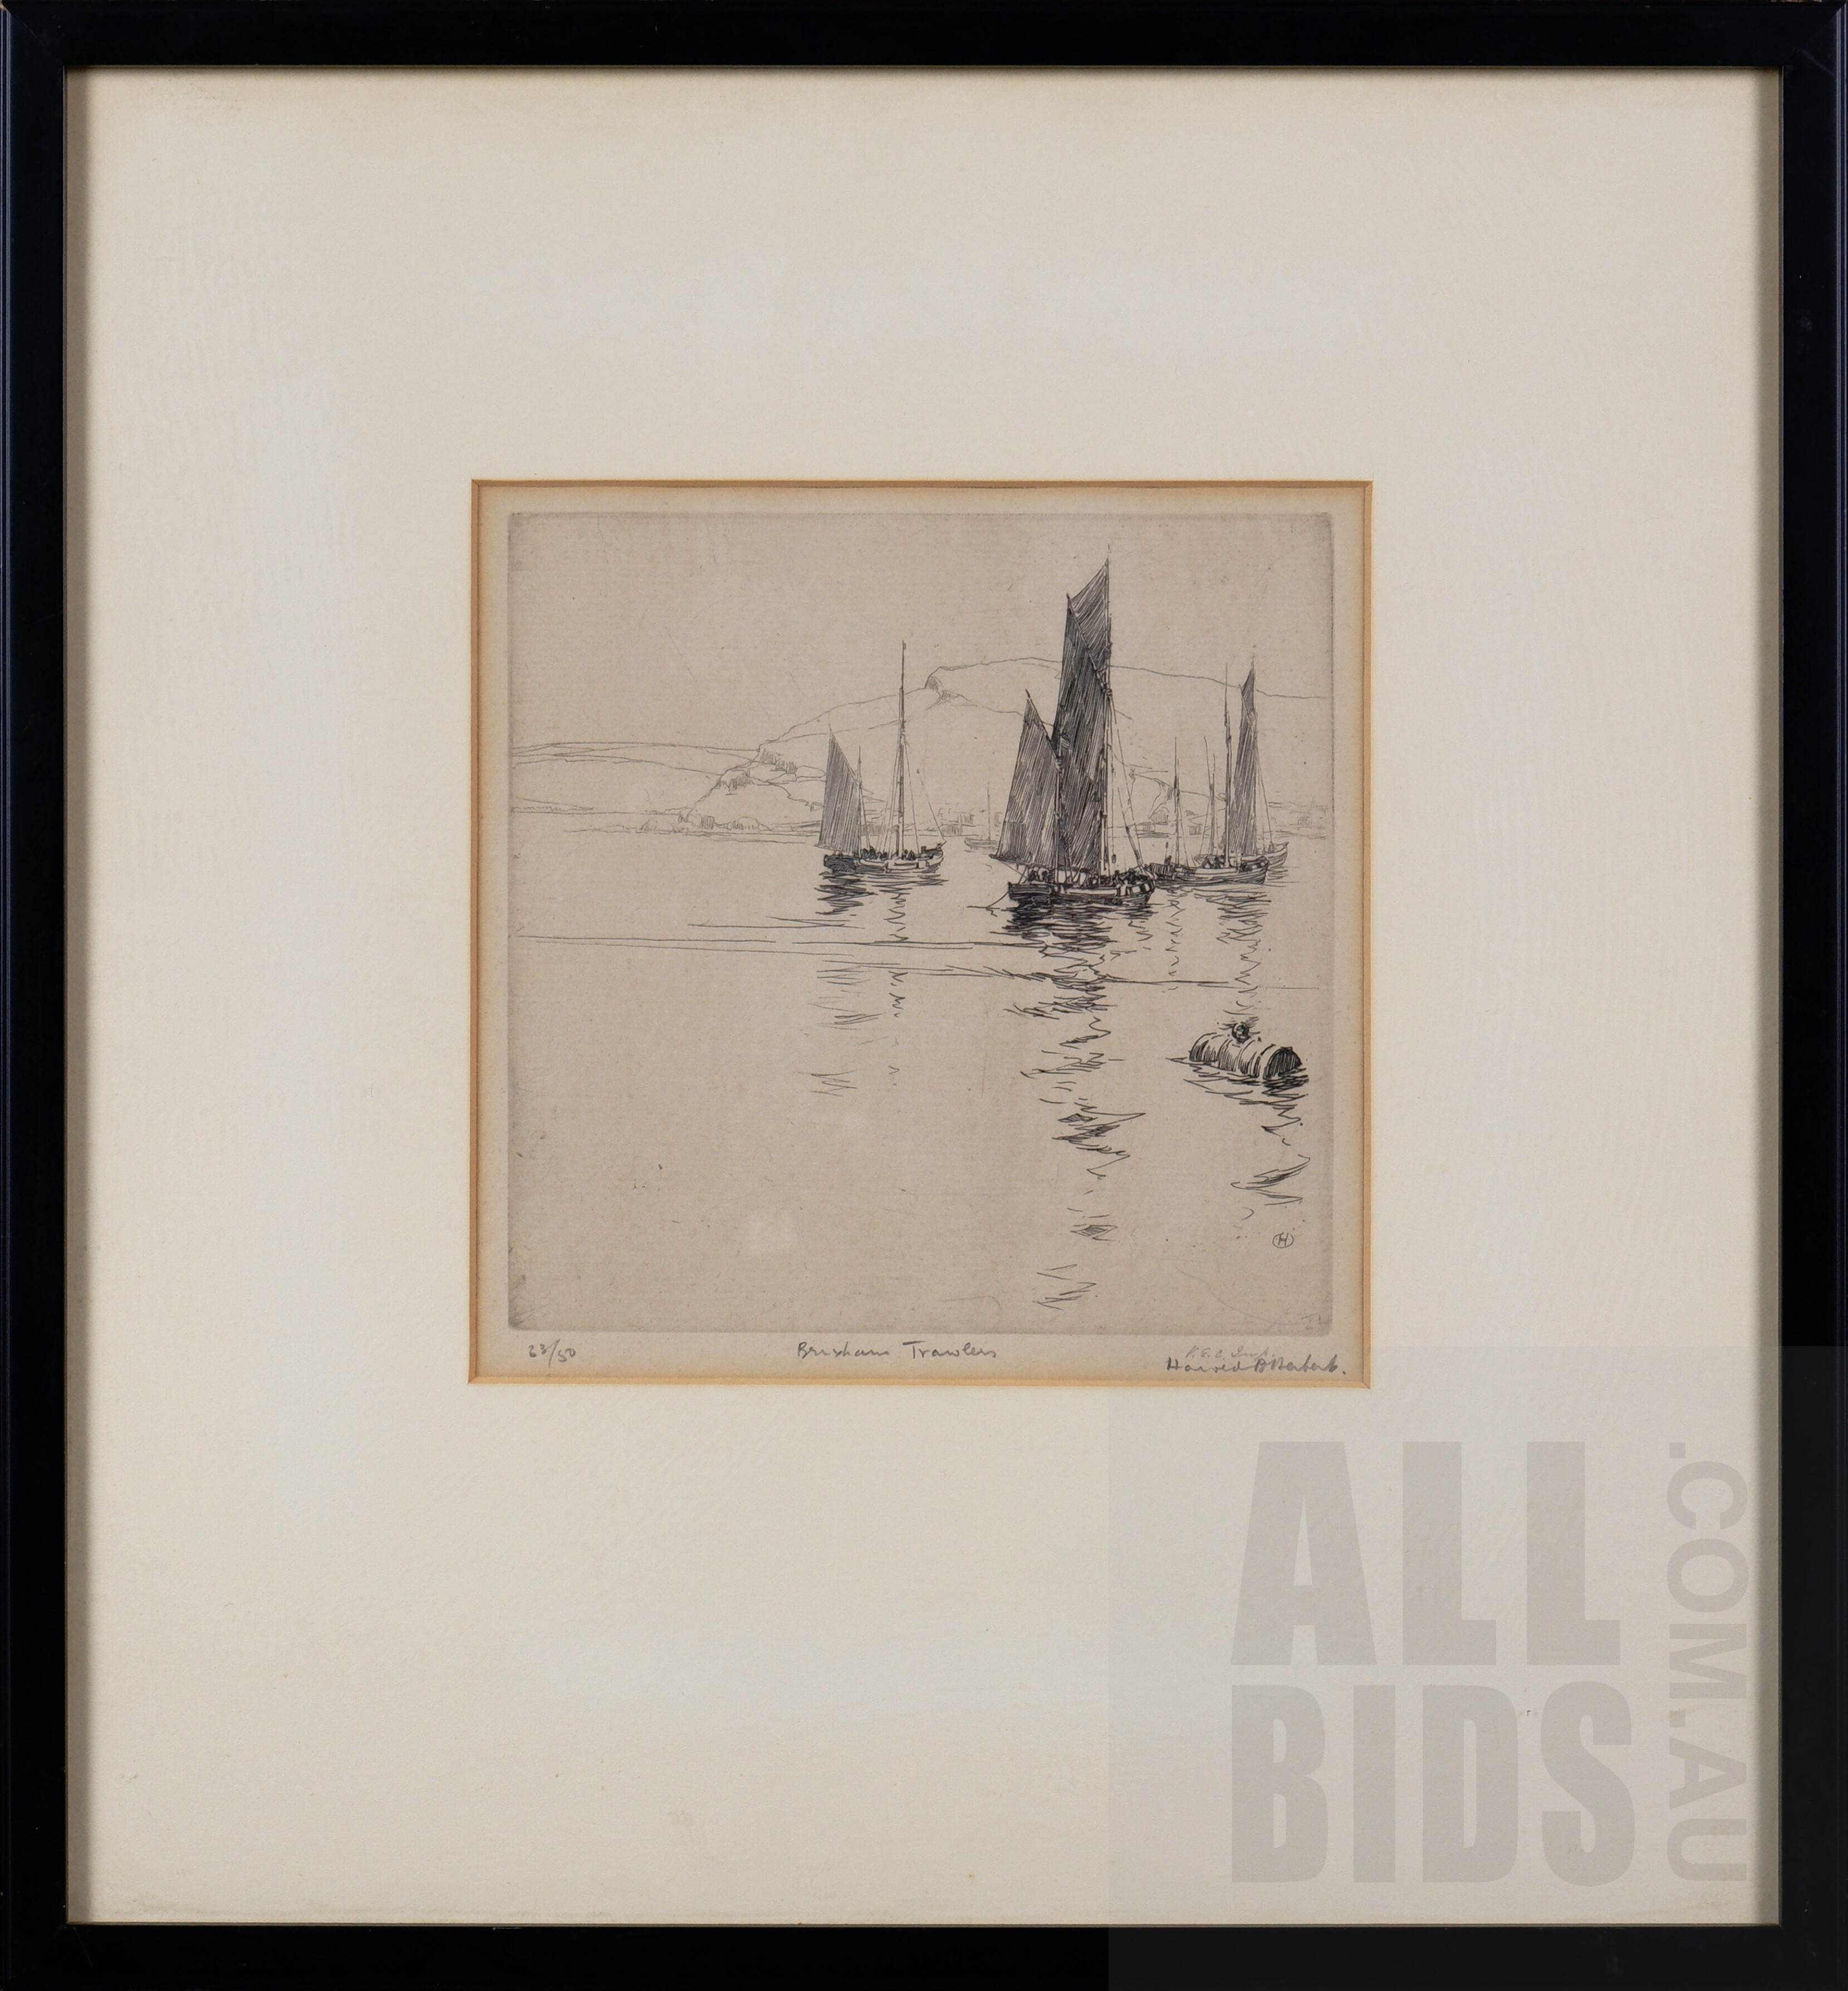 'Harold Herbert (1892-1945), Brixham Trawlers, Etching, 15 x 15 cm (image size)'